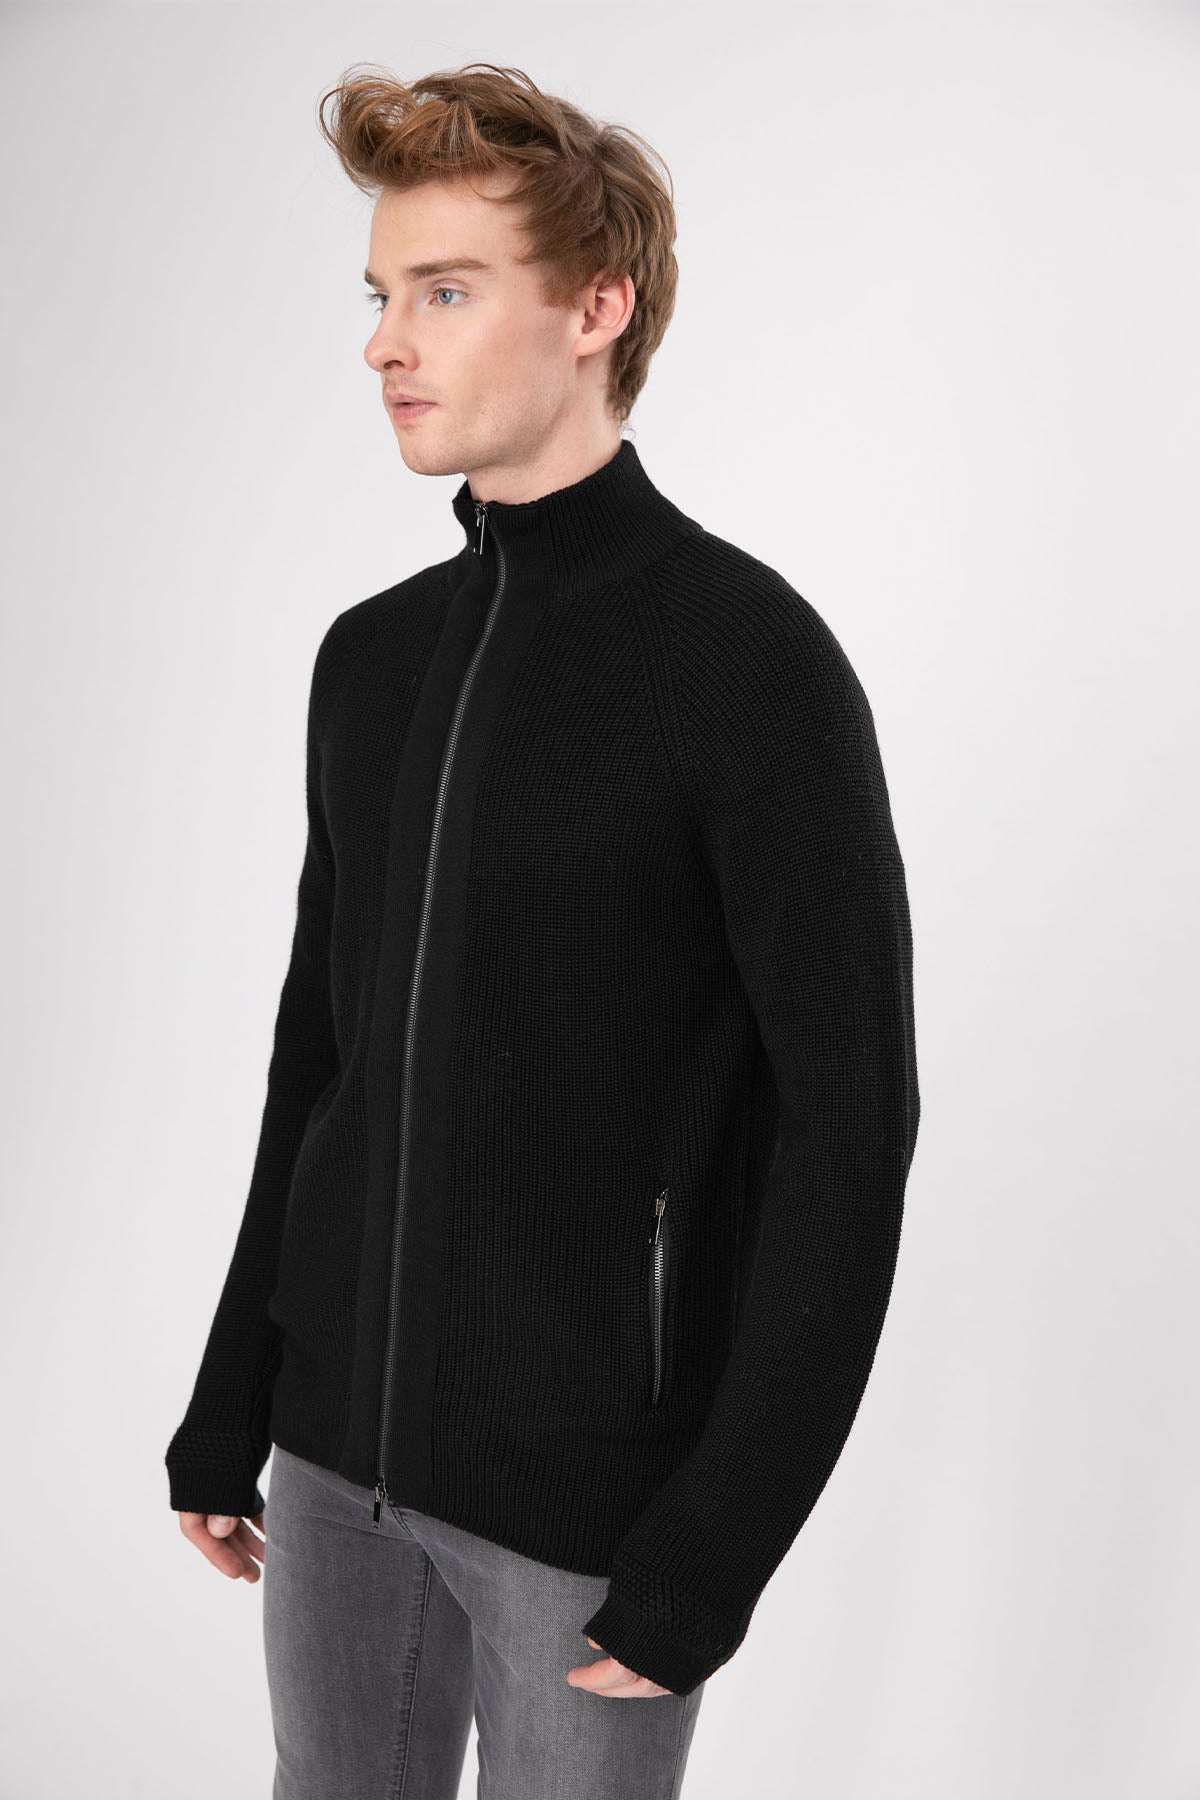 Manifattura Örgü Yün Fermuarlı Triko Ceket-Libas Trendy Fashion Store